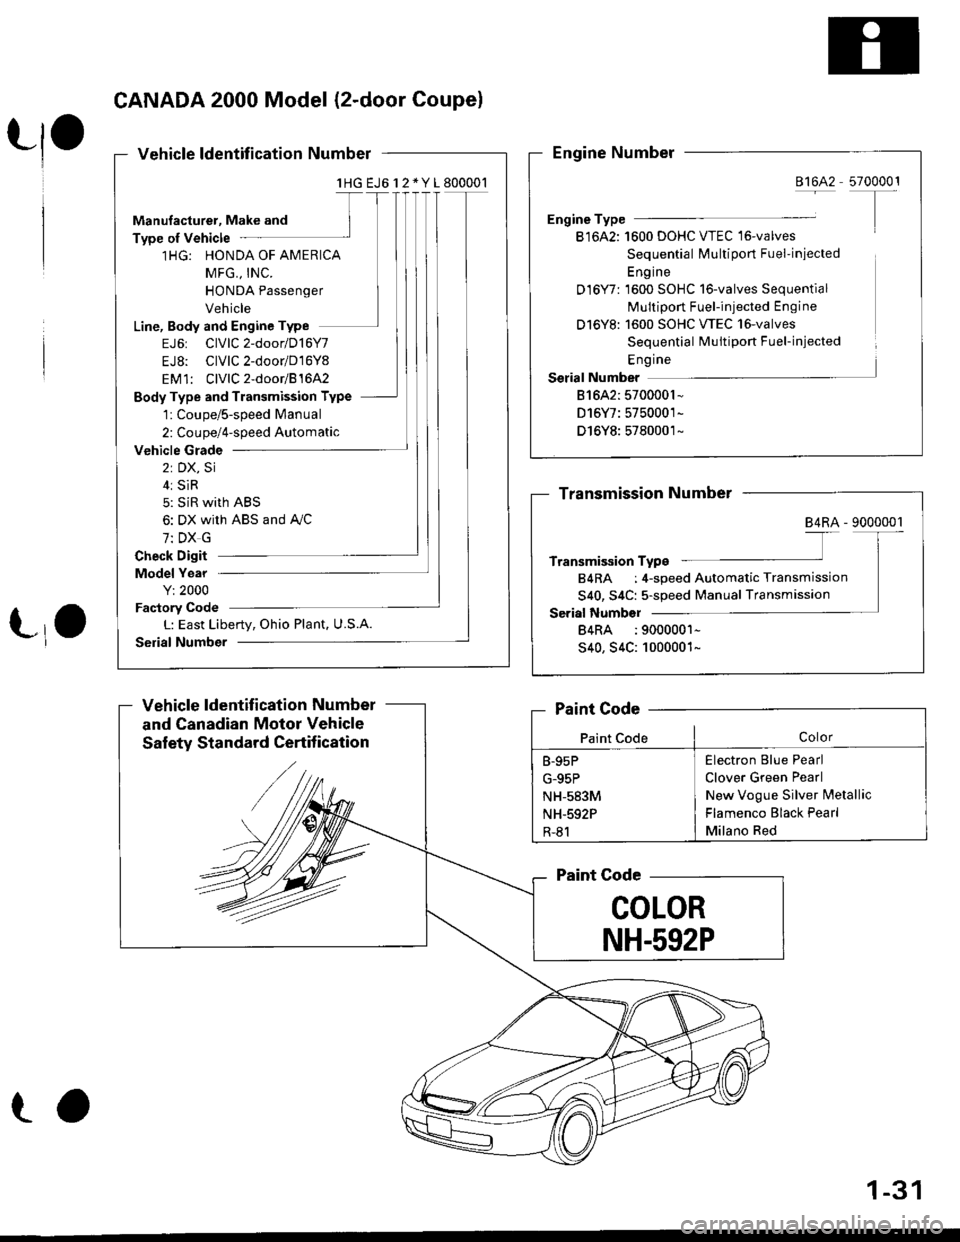 HONDA CIVIC 1999 6.G Owners Manual CANADA 2000 Model (2-door Coupel
Vehicle ldentification Number
lHG EJ6l 2 * Y 1800001
Manufacturer, Make and
Type of Vehicle
1HG: HONDA OF AMERICA
MFG,, INC.
HONDA Passenger
Vehicle
Line, Body and En